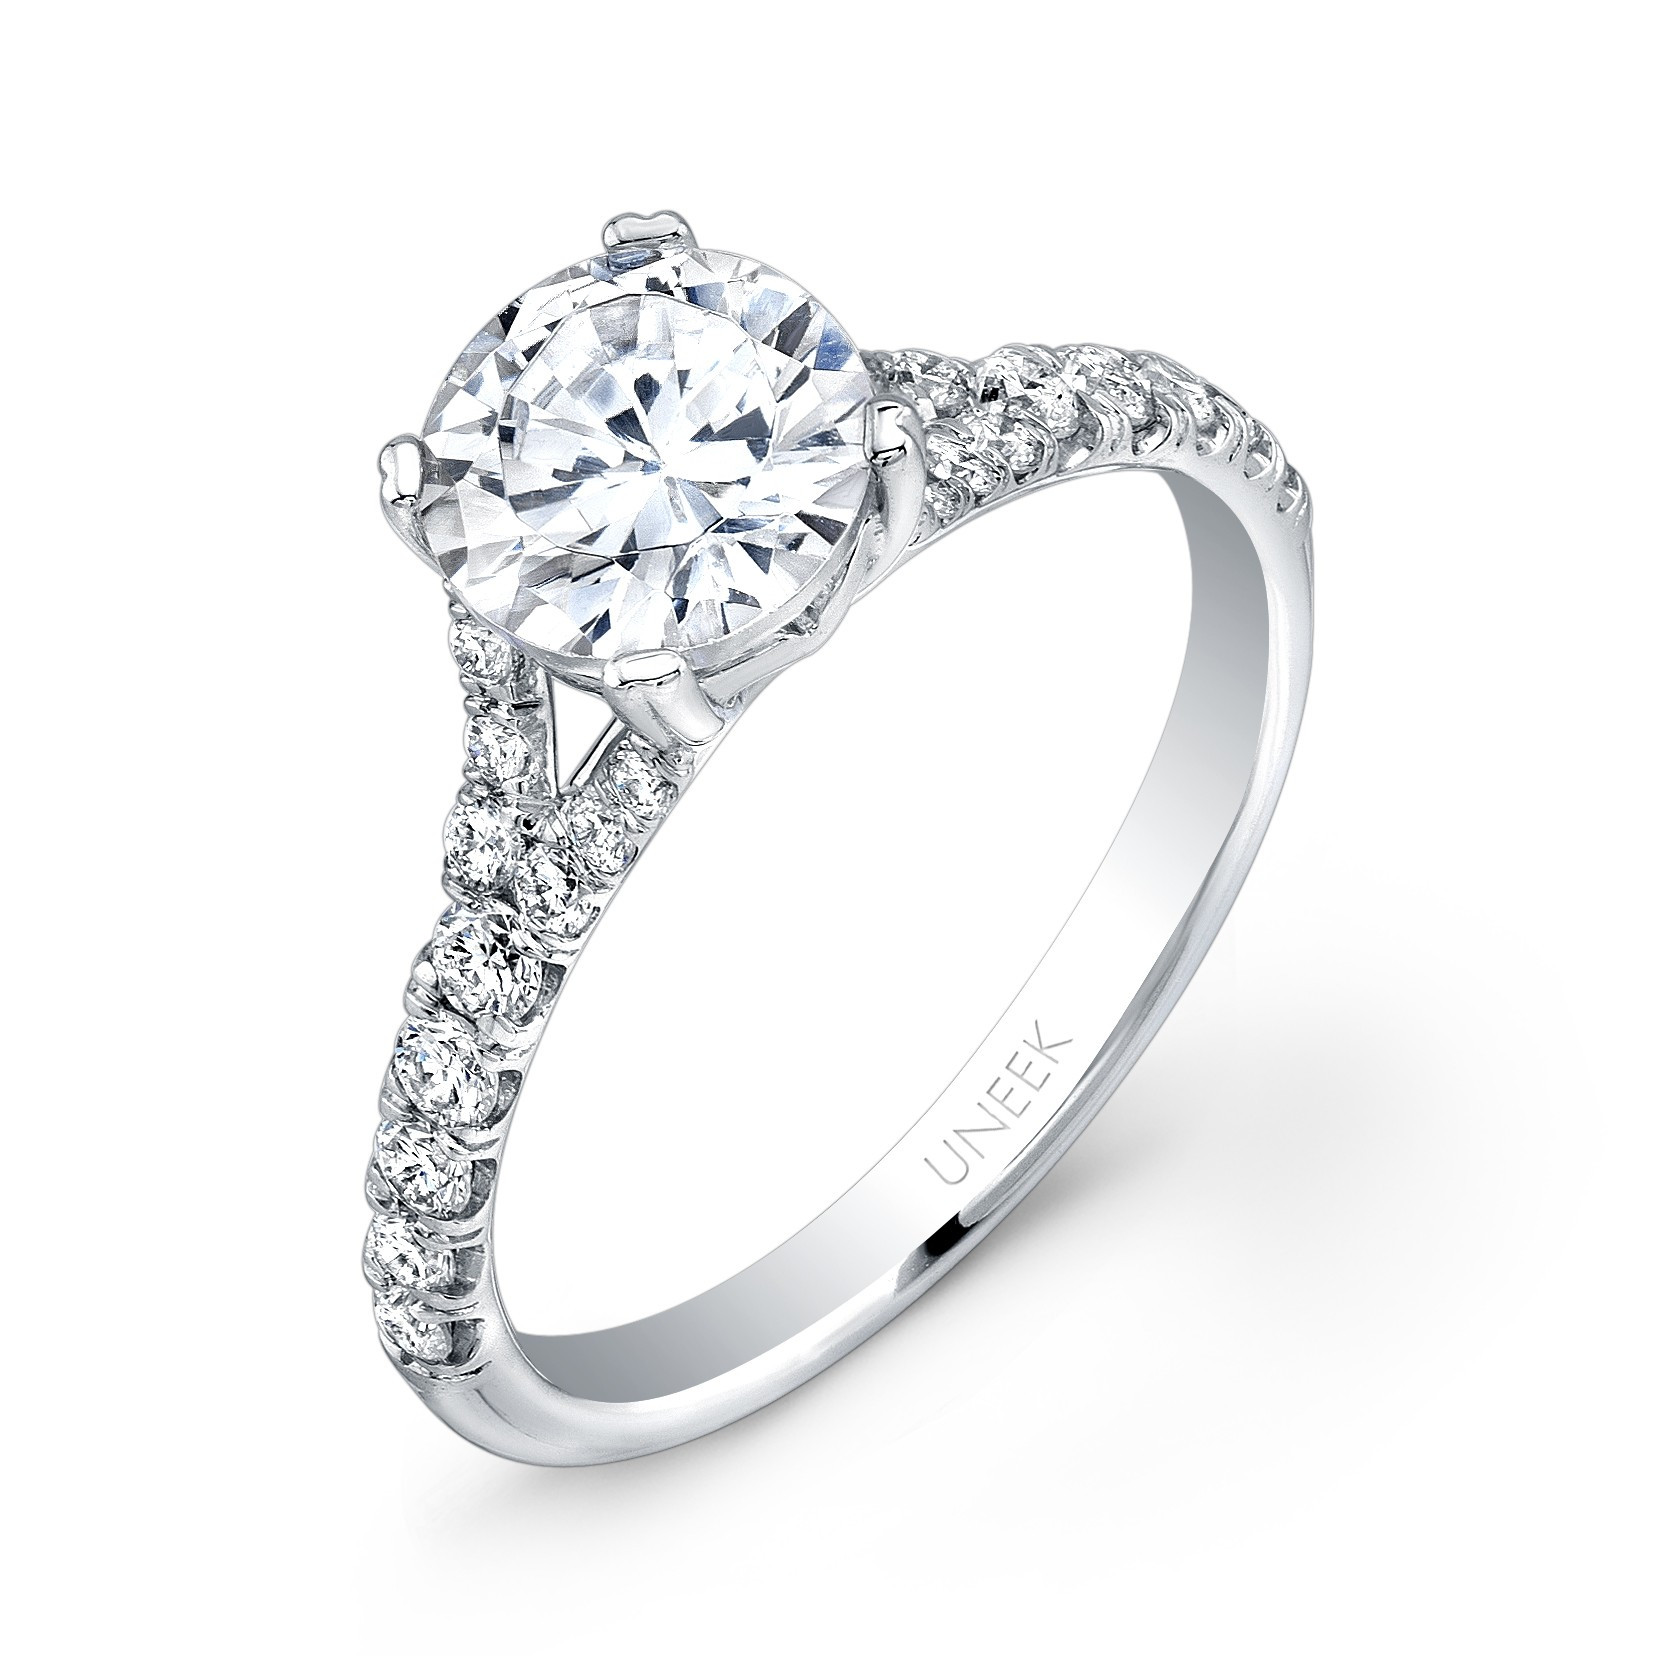 Round Diamond Engagement Rings
 Uneek Contemporary Round Diamond Solitaire Engagement Ring